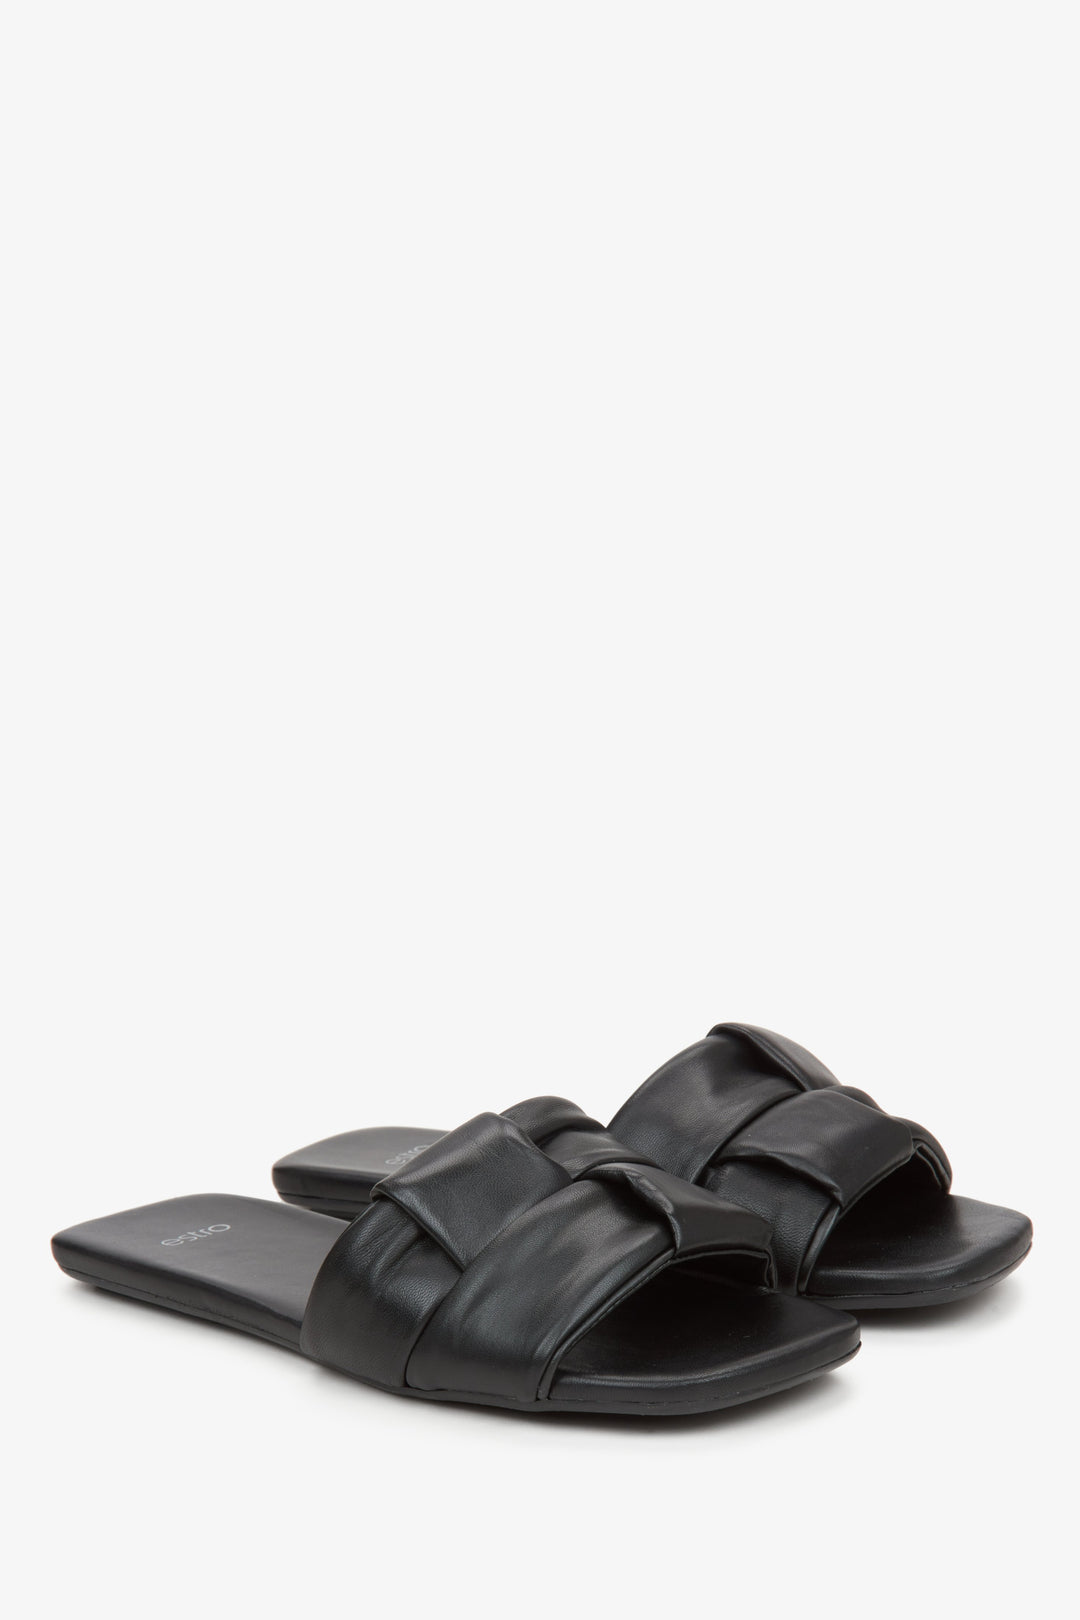 Estro Women's Slide Sandals in Black Patch Leather